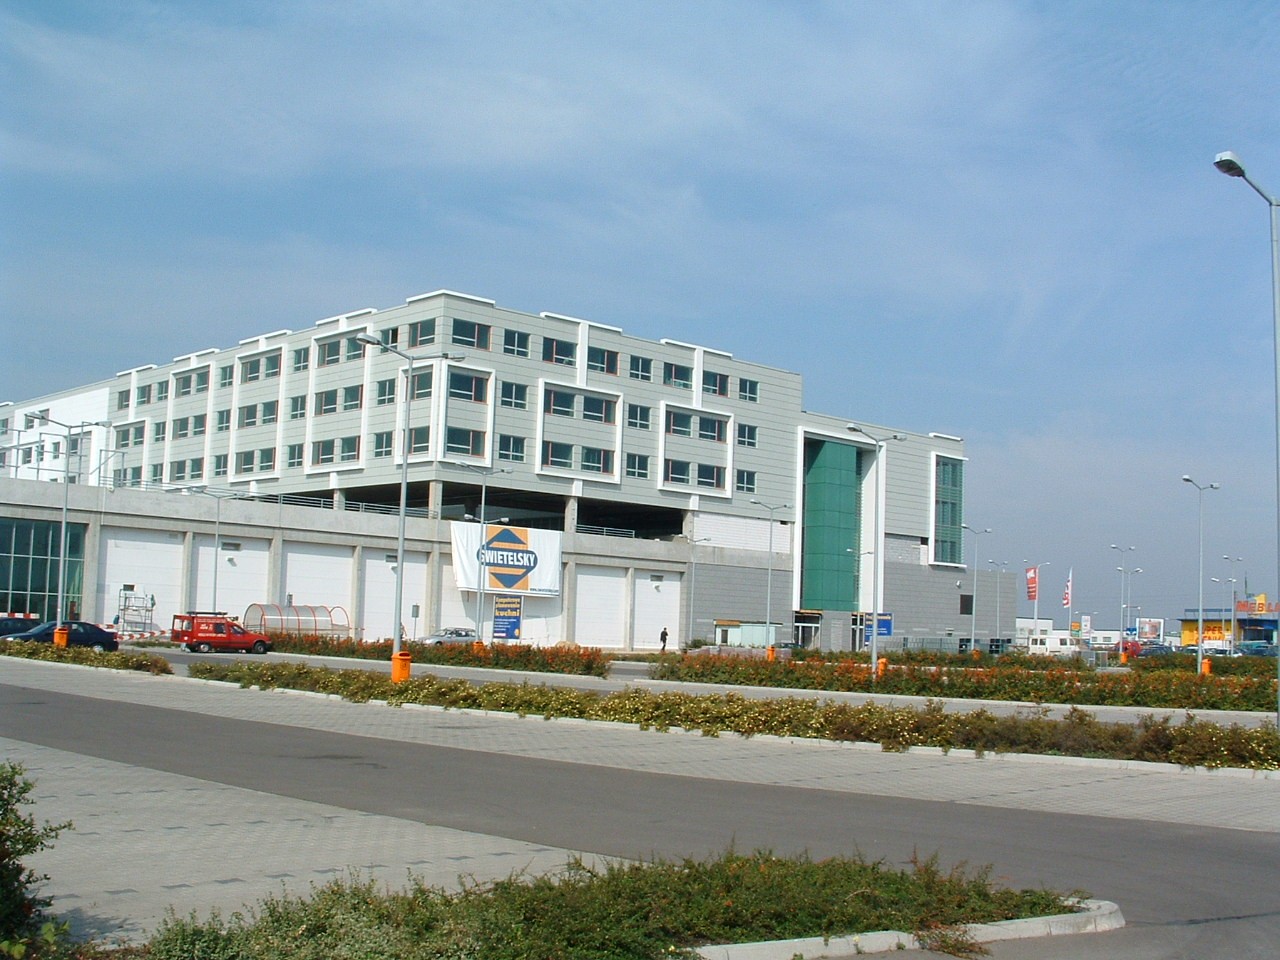 Hipermarket Real i Biurowiec Metro AG w Warszawie - Bygningskonstruksjon